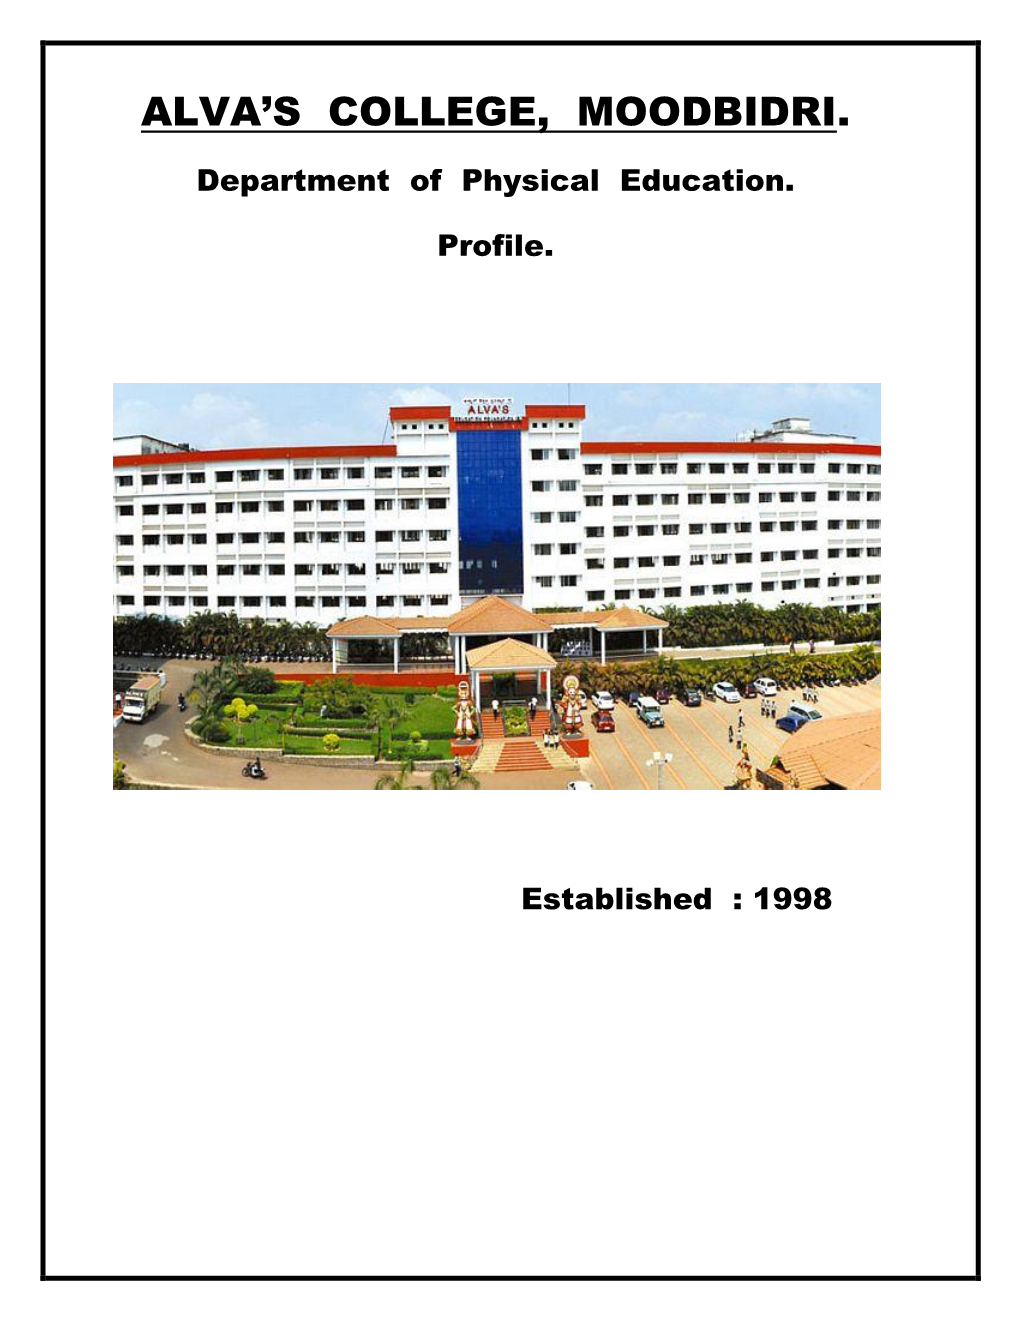 Alva's College , Moodbidri Dk, Profile of the Department